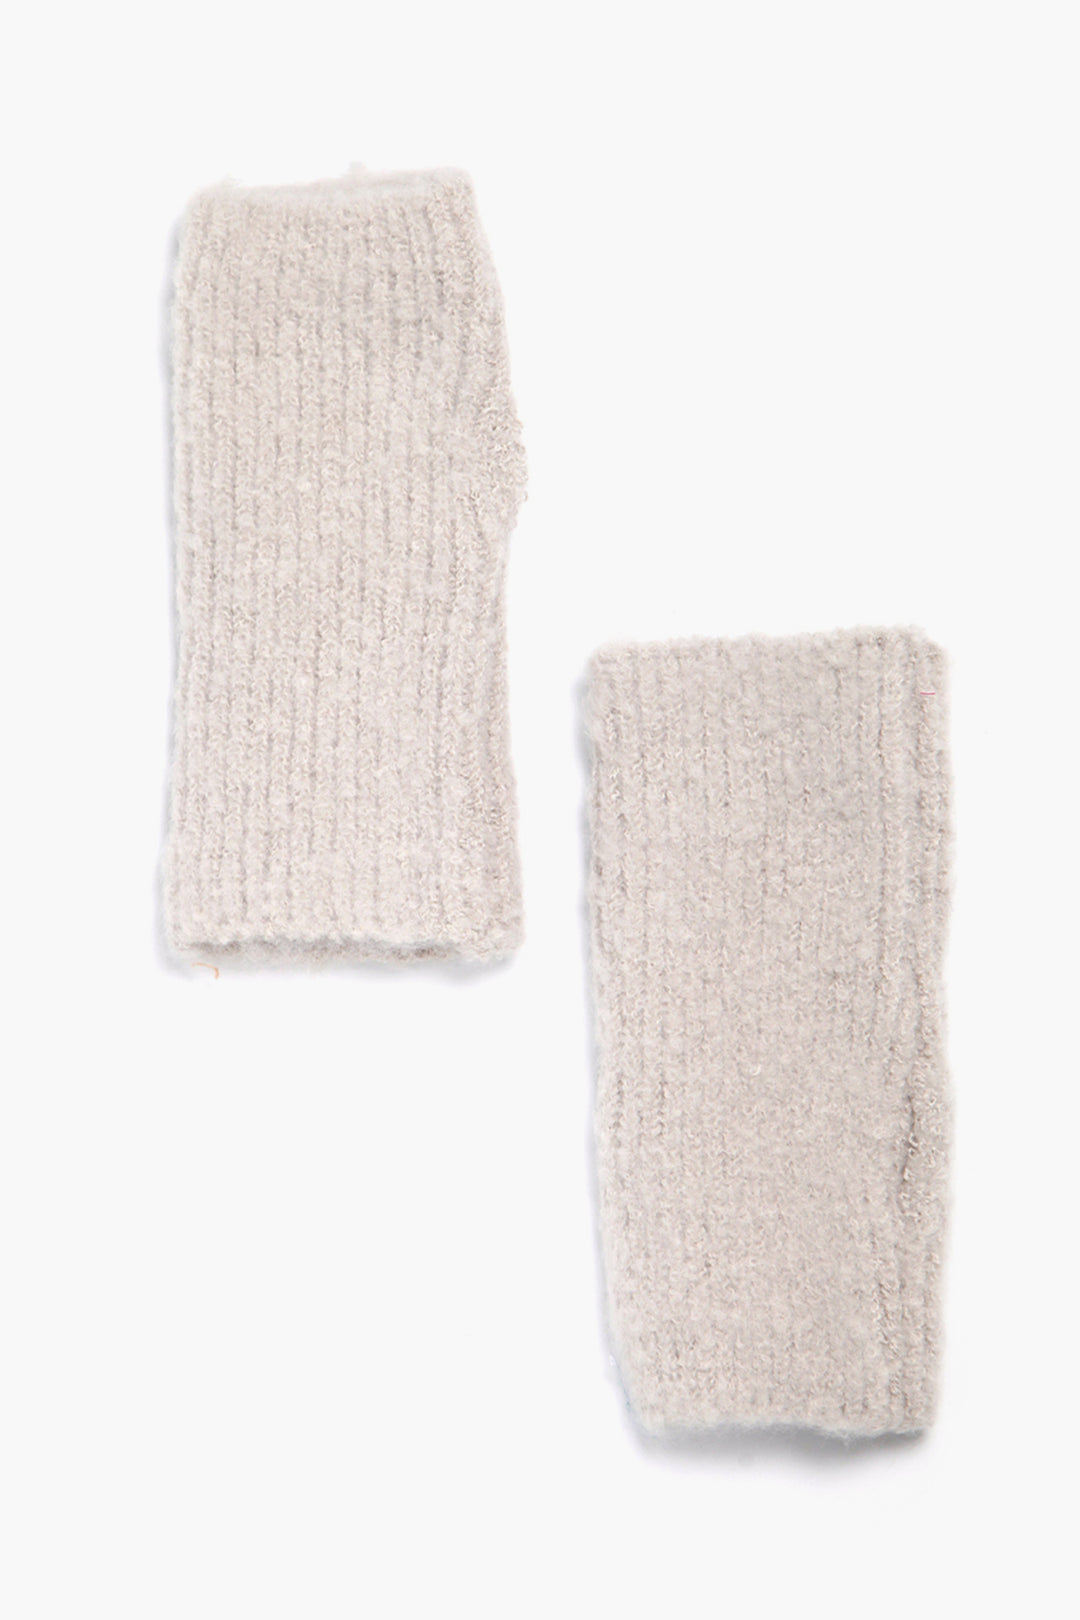 Cream Plain Textured Knitted Wrist Warmers